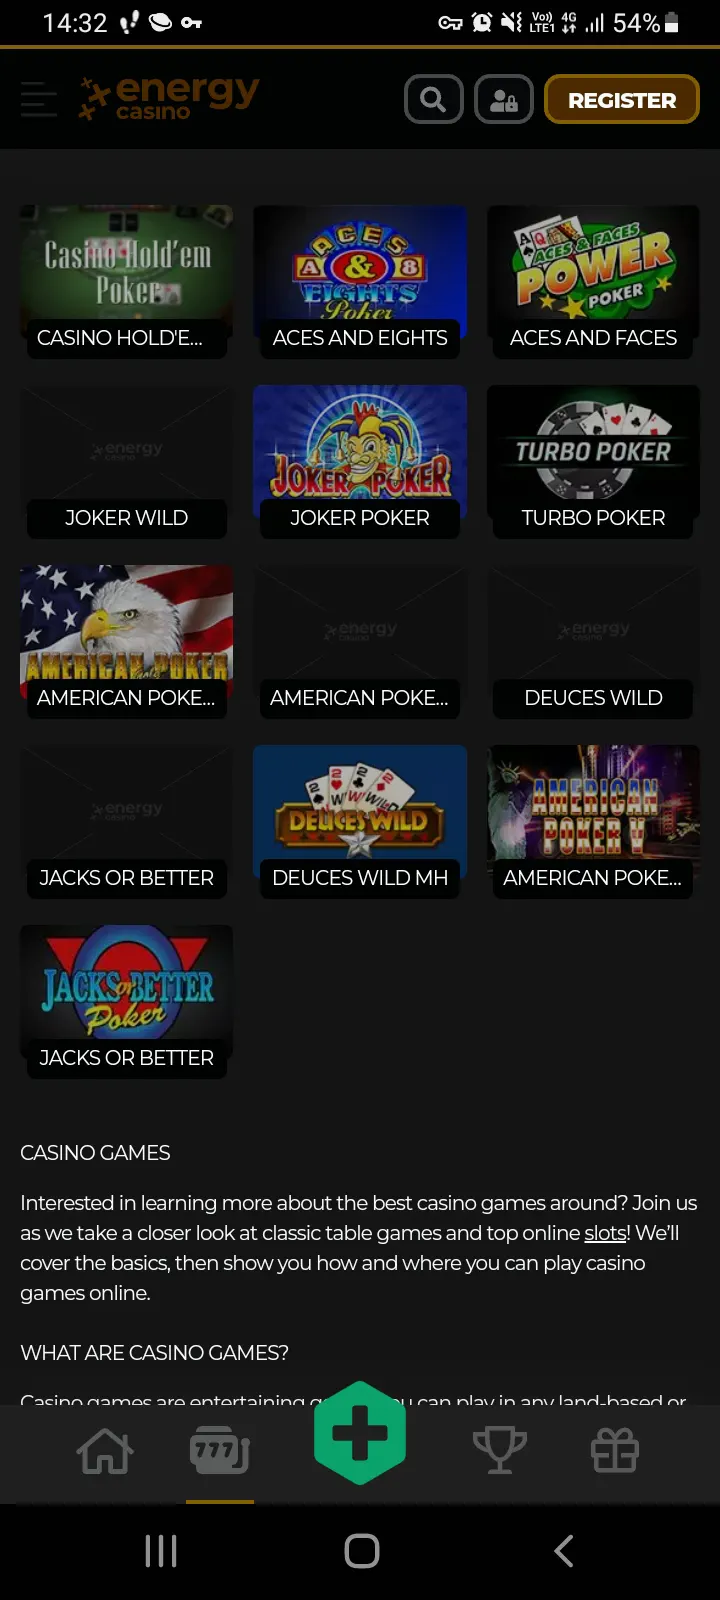 Energy casino app screenshot 7